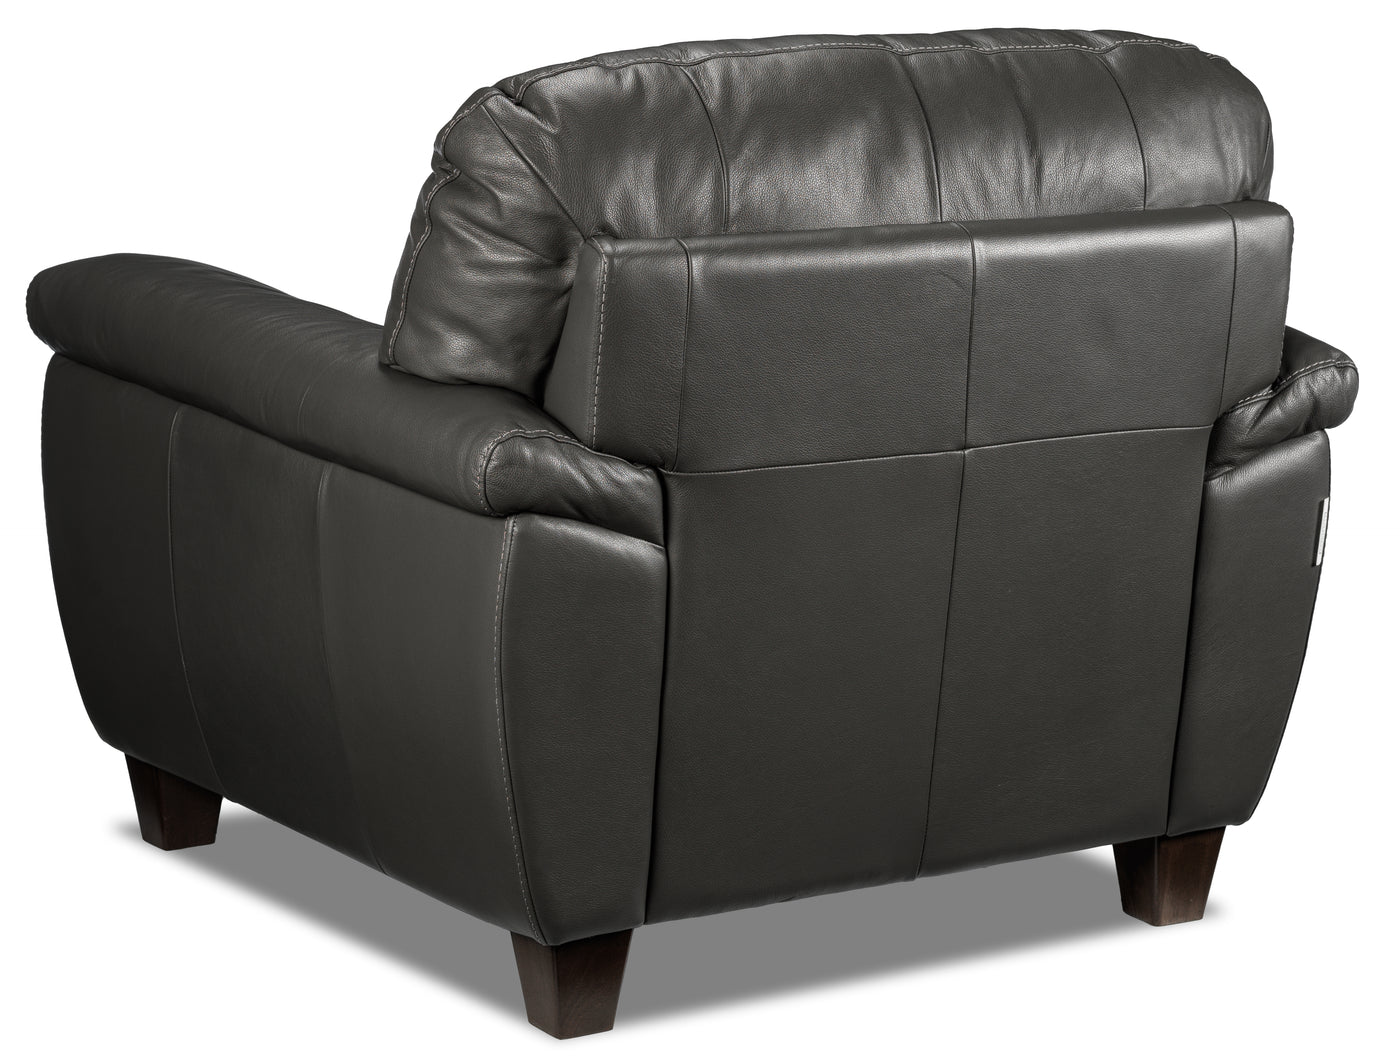 Leonardo Leather Chair - Grey